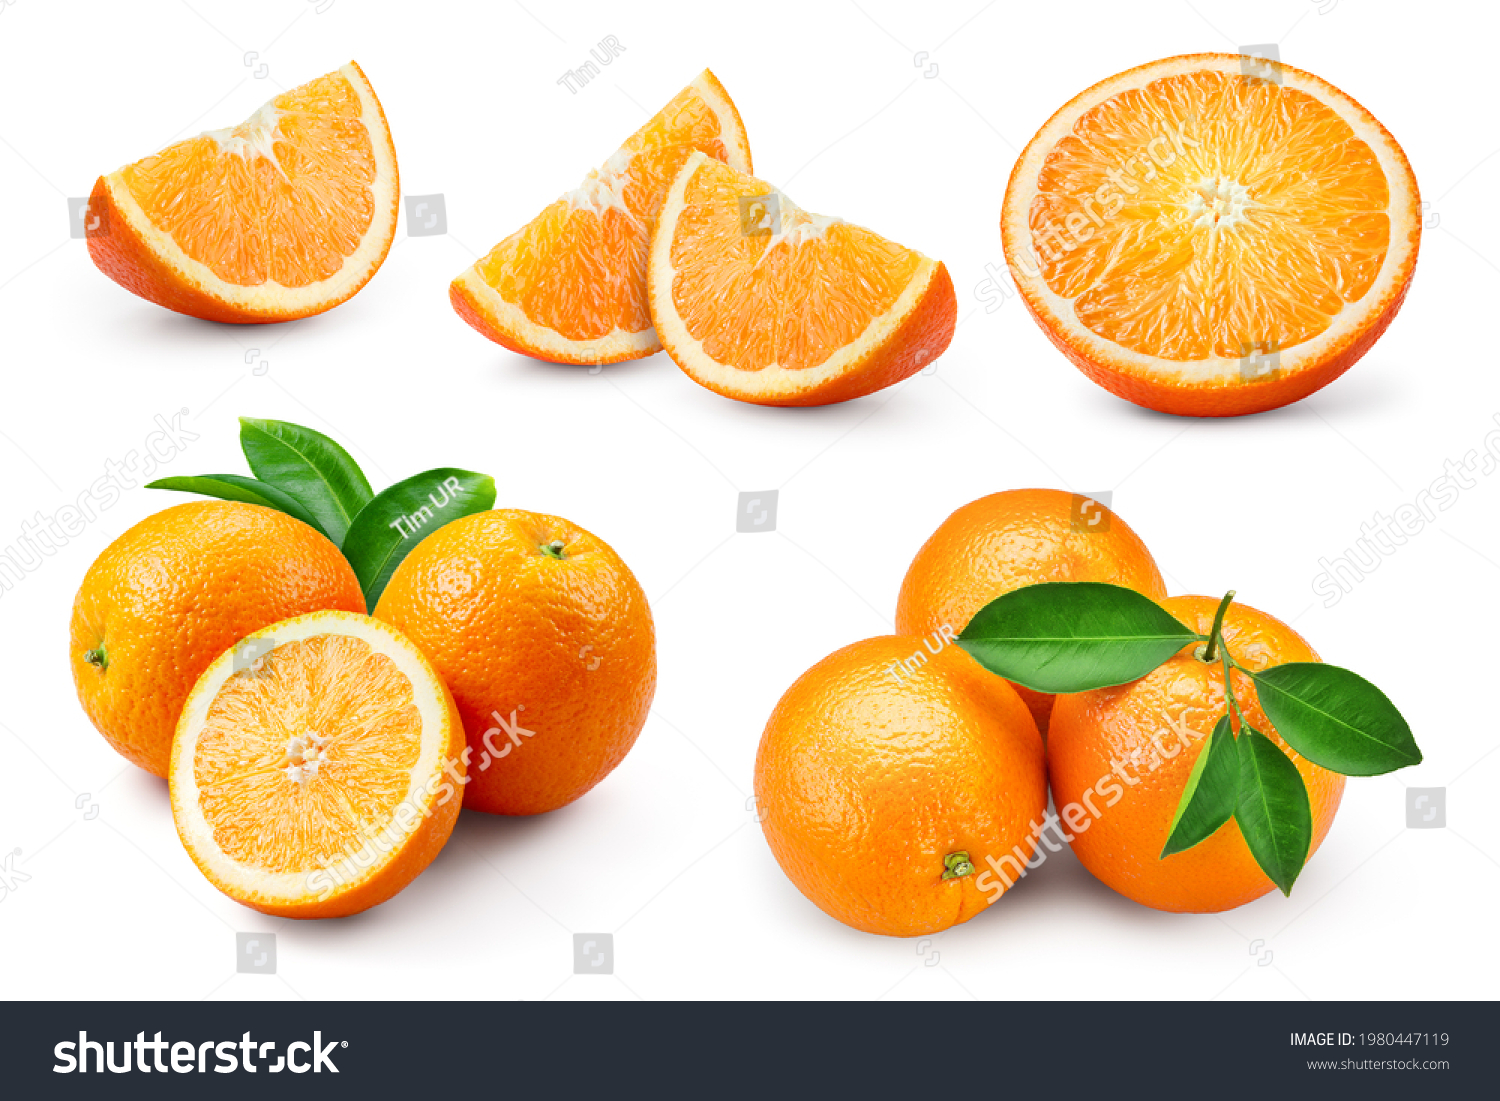 Orang Fruit Isolate Orange Leaves Isolated Stock Photo 543103645 | Shutterstock